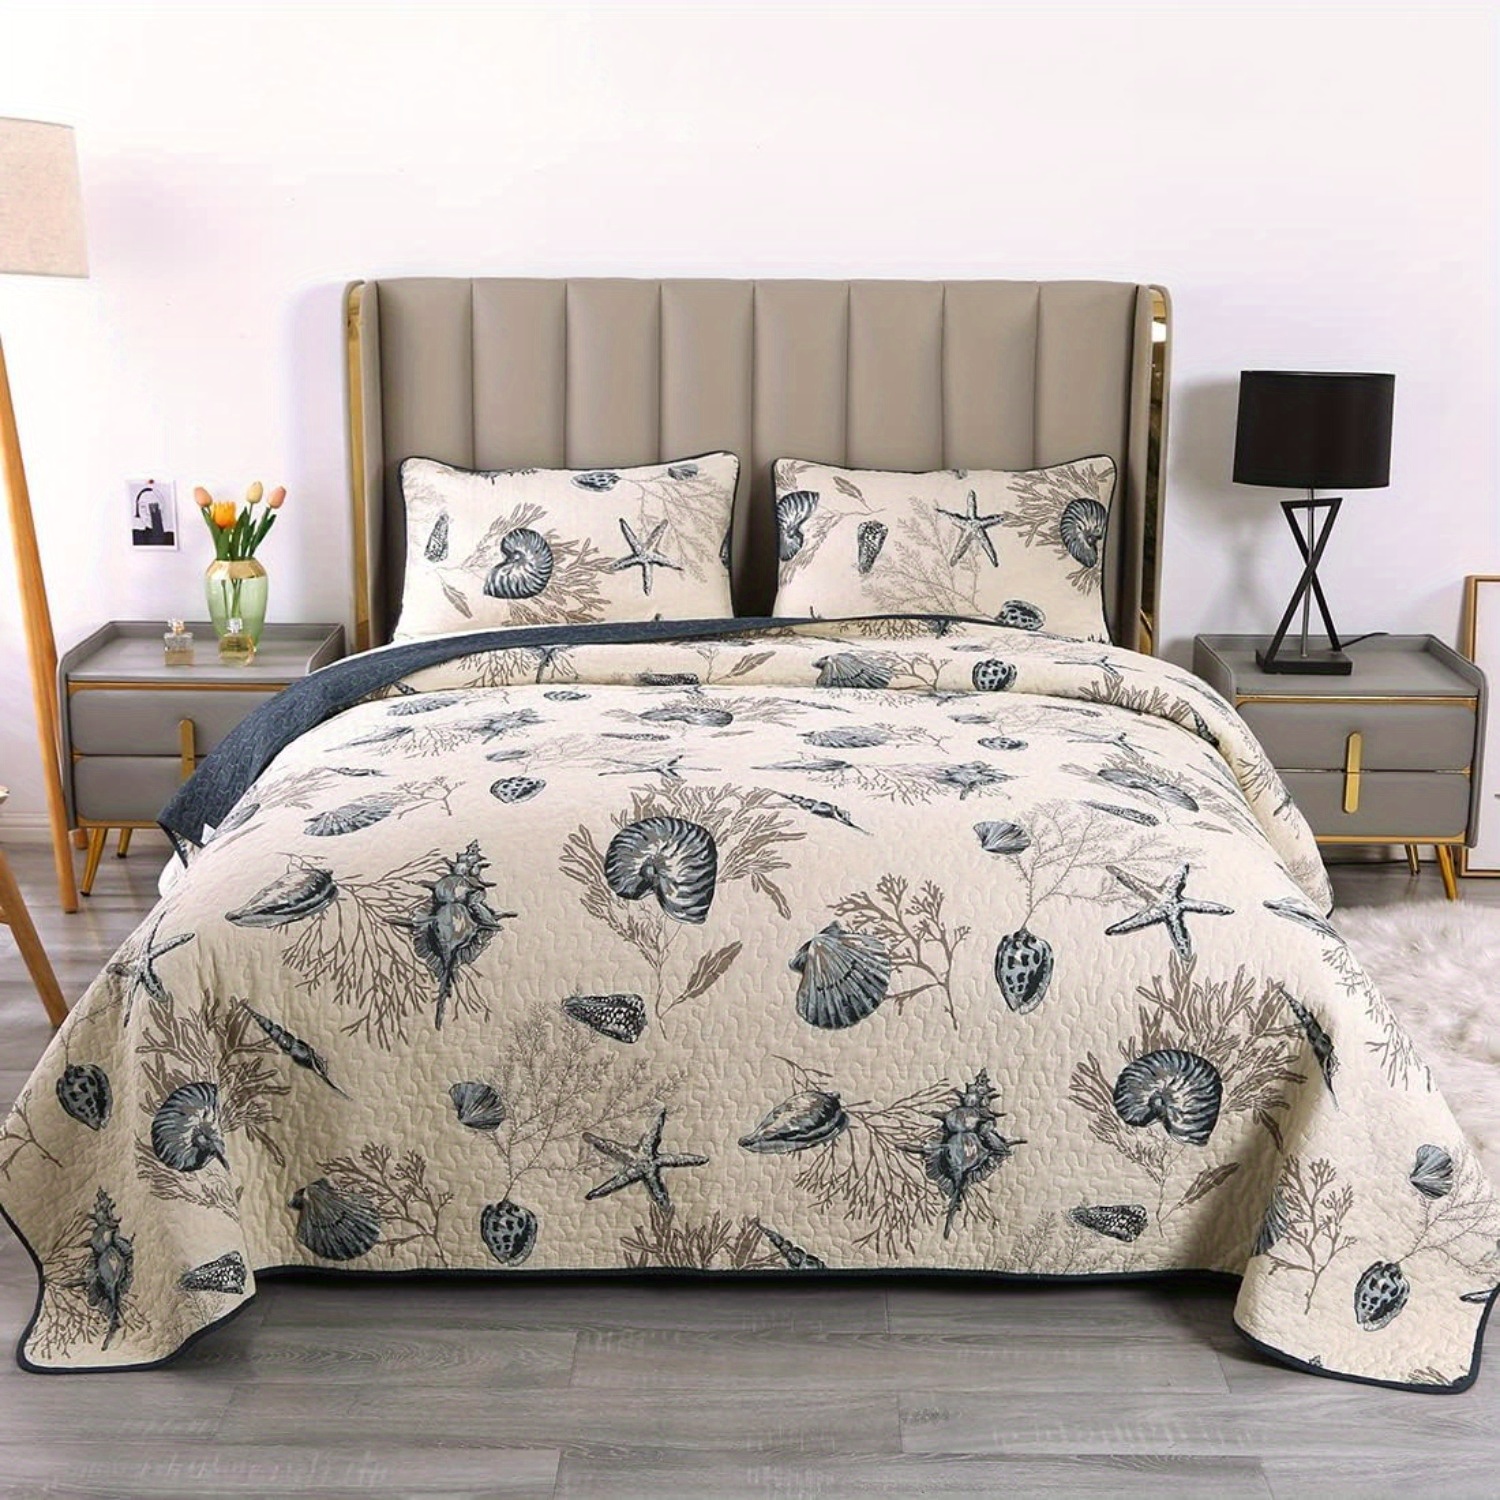 

Blue Shell Tread Design 3 Piece Comforter Quilt Bedspeads Sets Queen Cotton White&blue